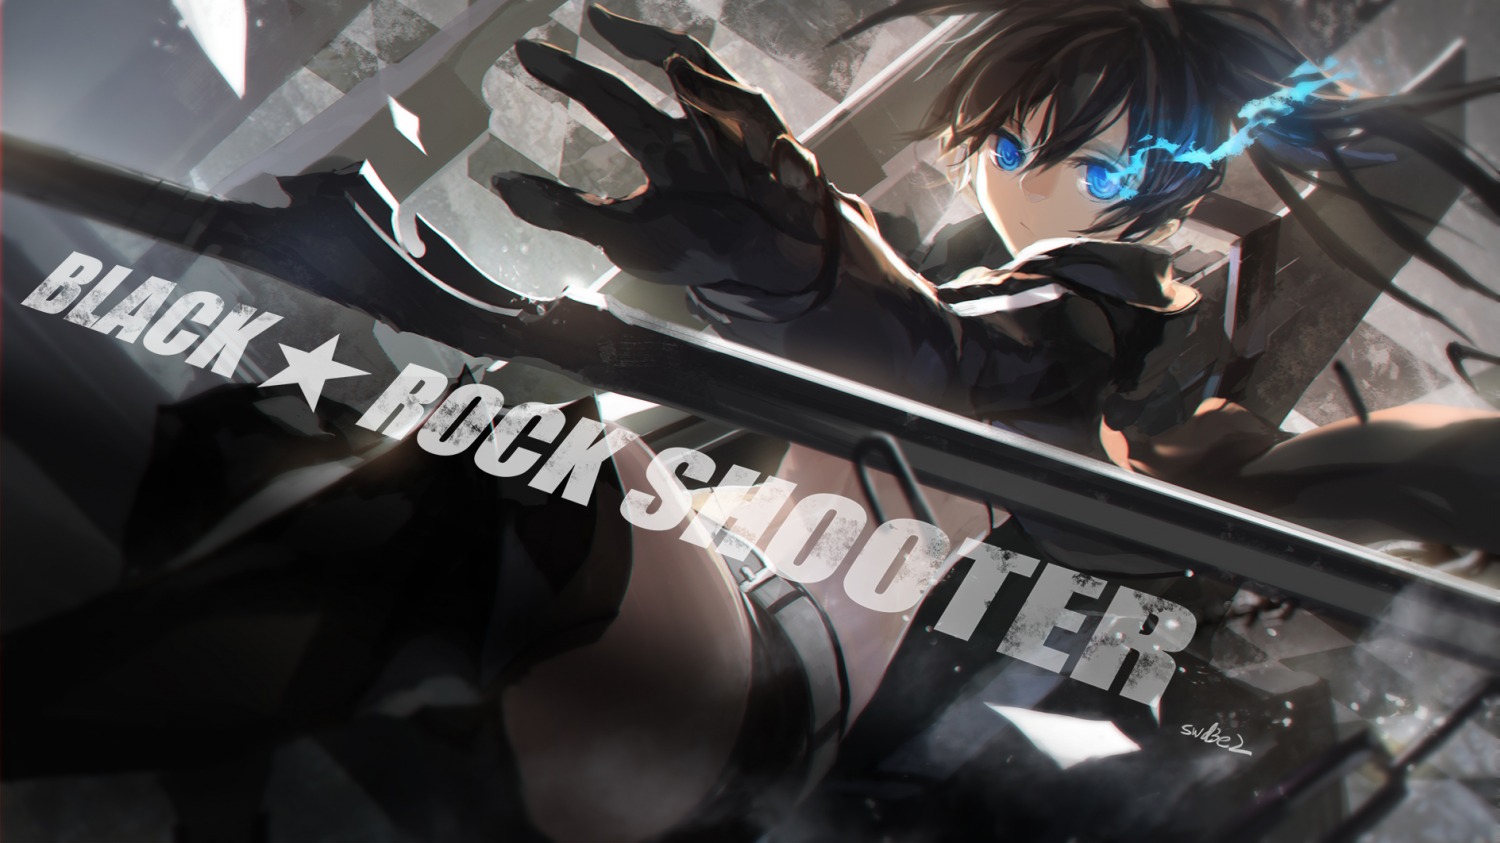 black_rock_shooter black_rock_shooter_(character)